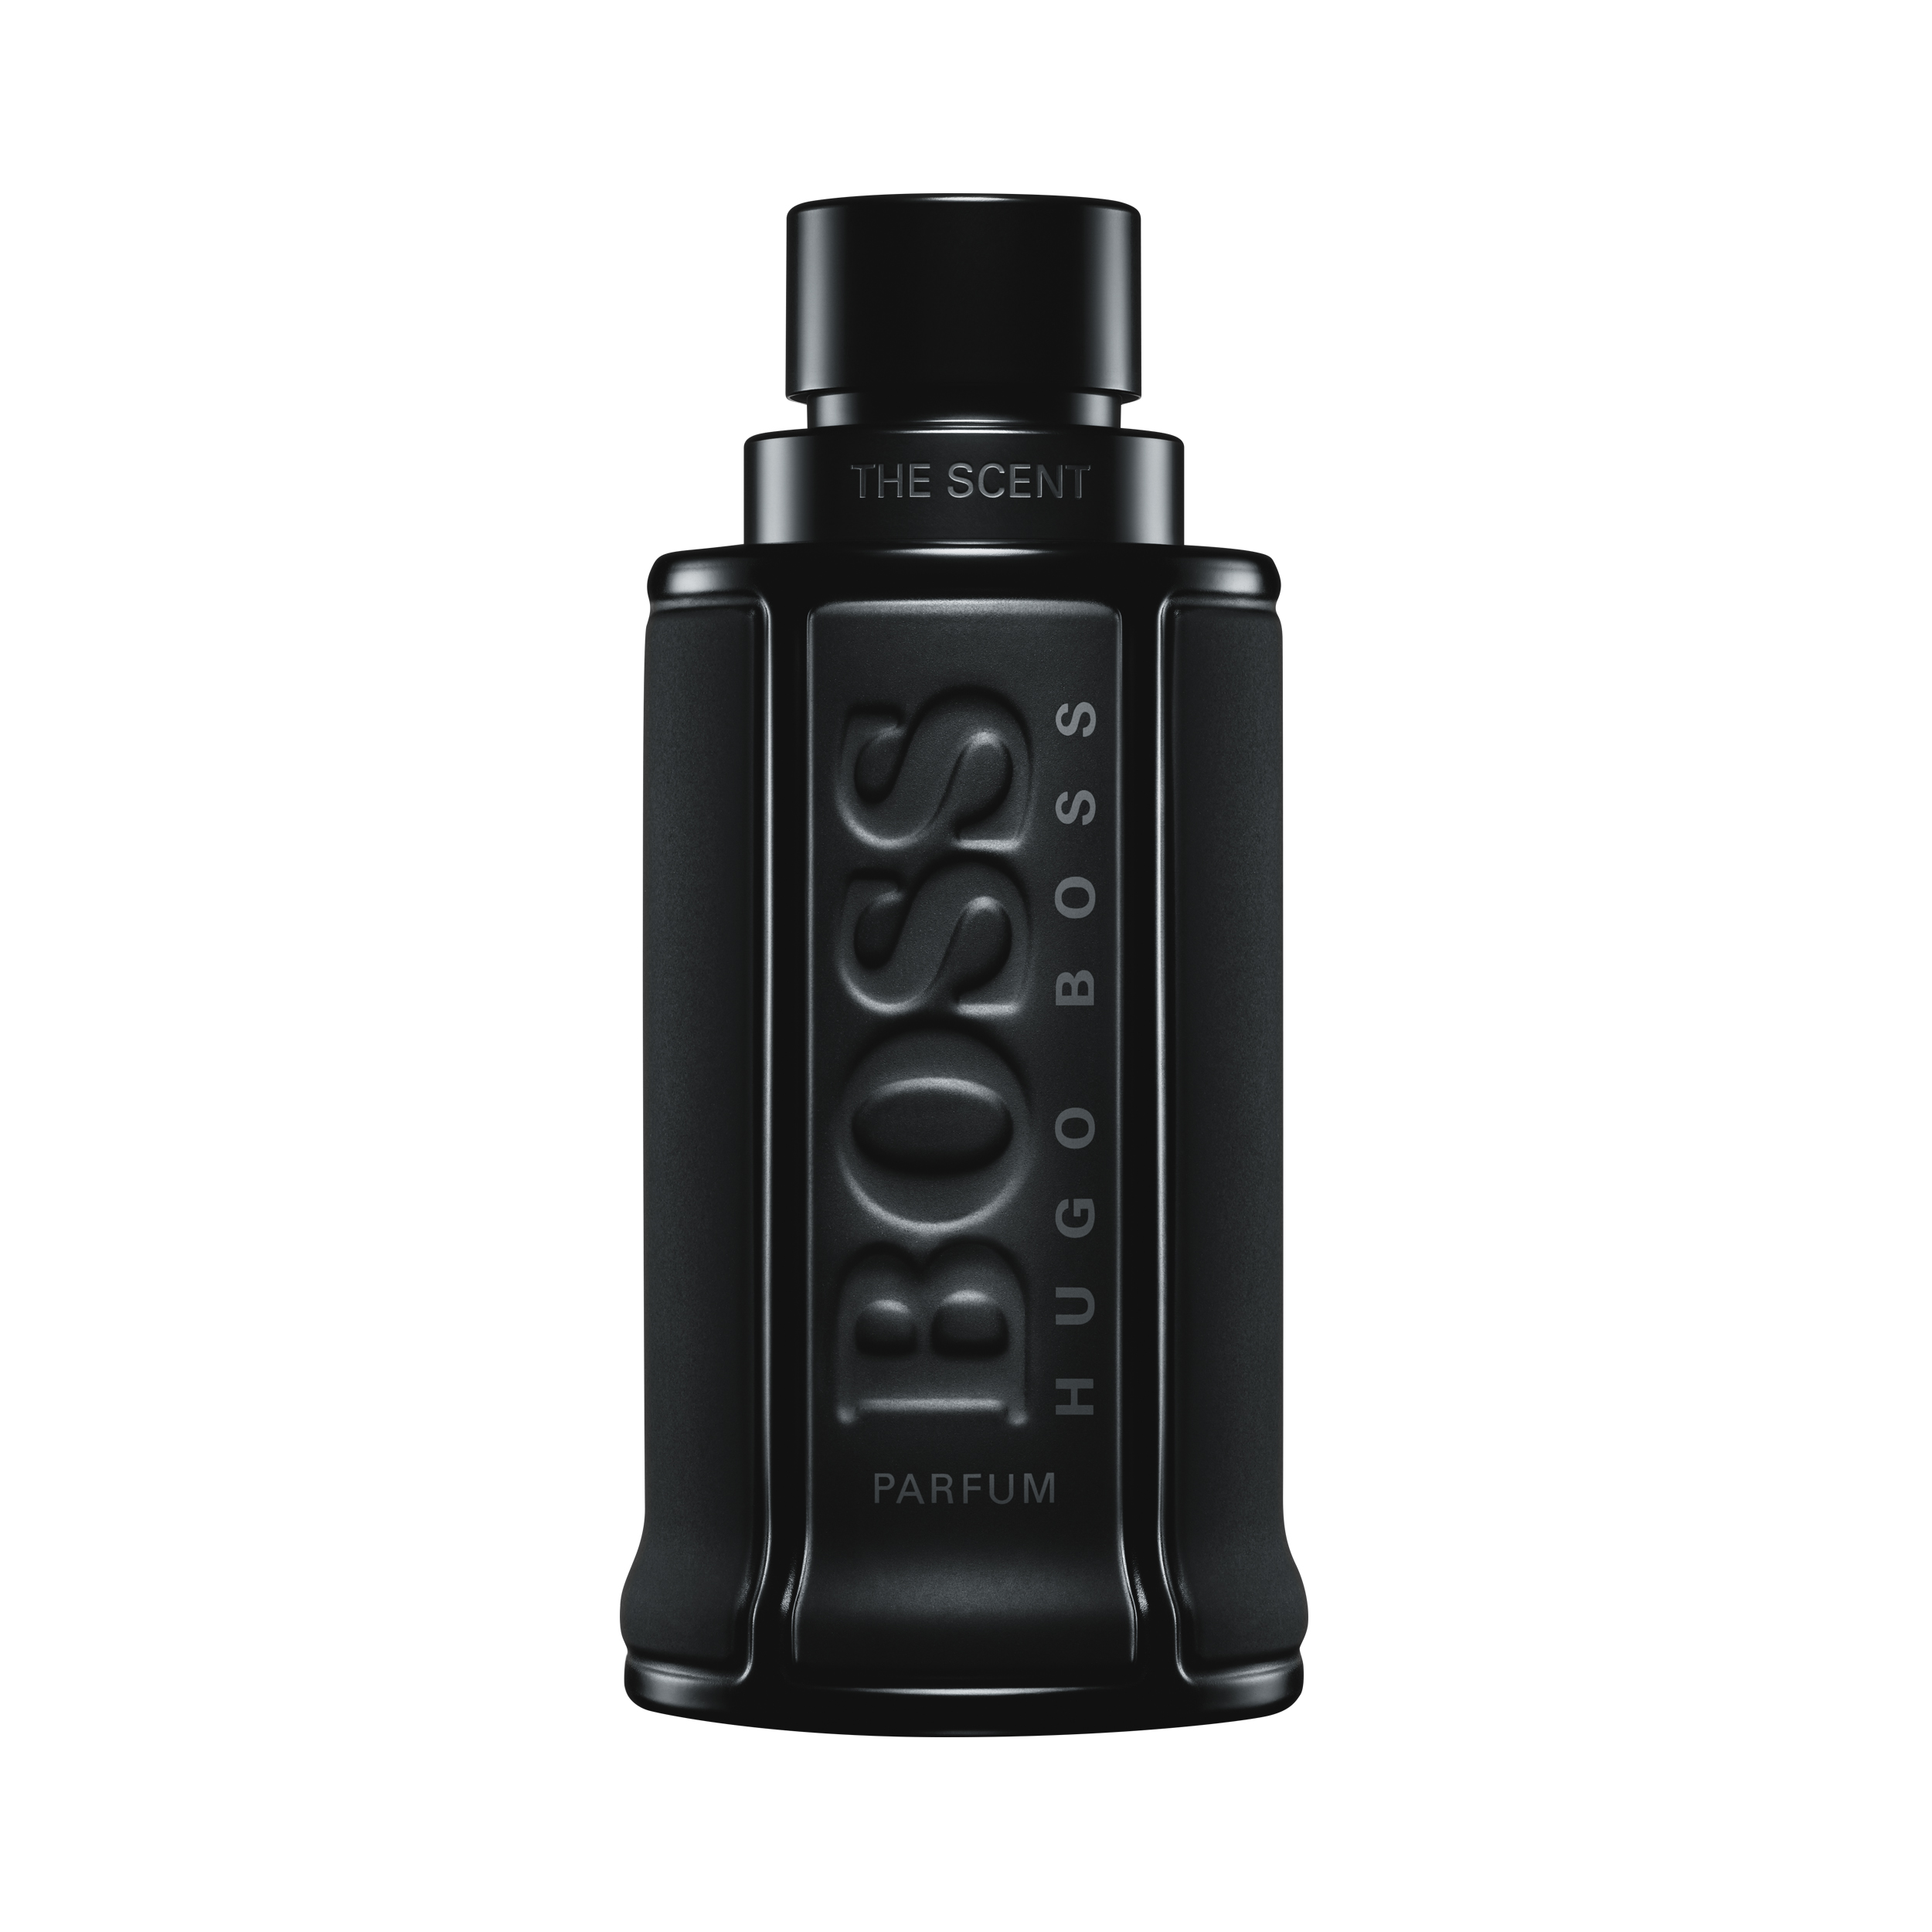 Hugo Boss' The Scent for Him Parfum 1